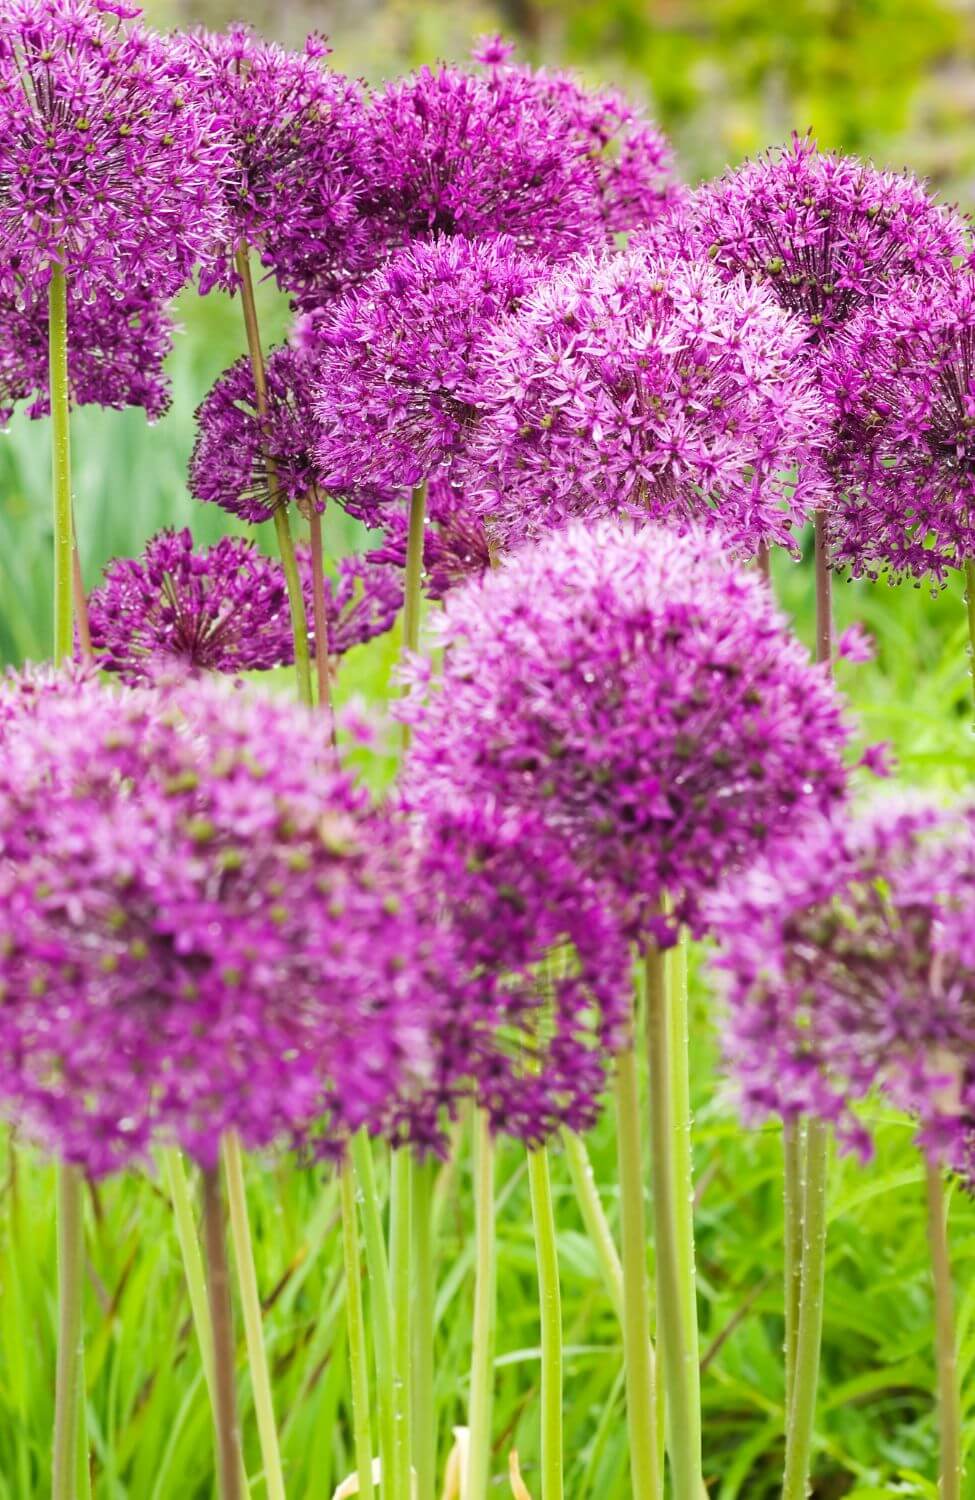 Purple Allium hollandicum Seeds - Cultivate majestic purple globes to add drama to your garden